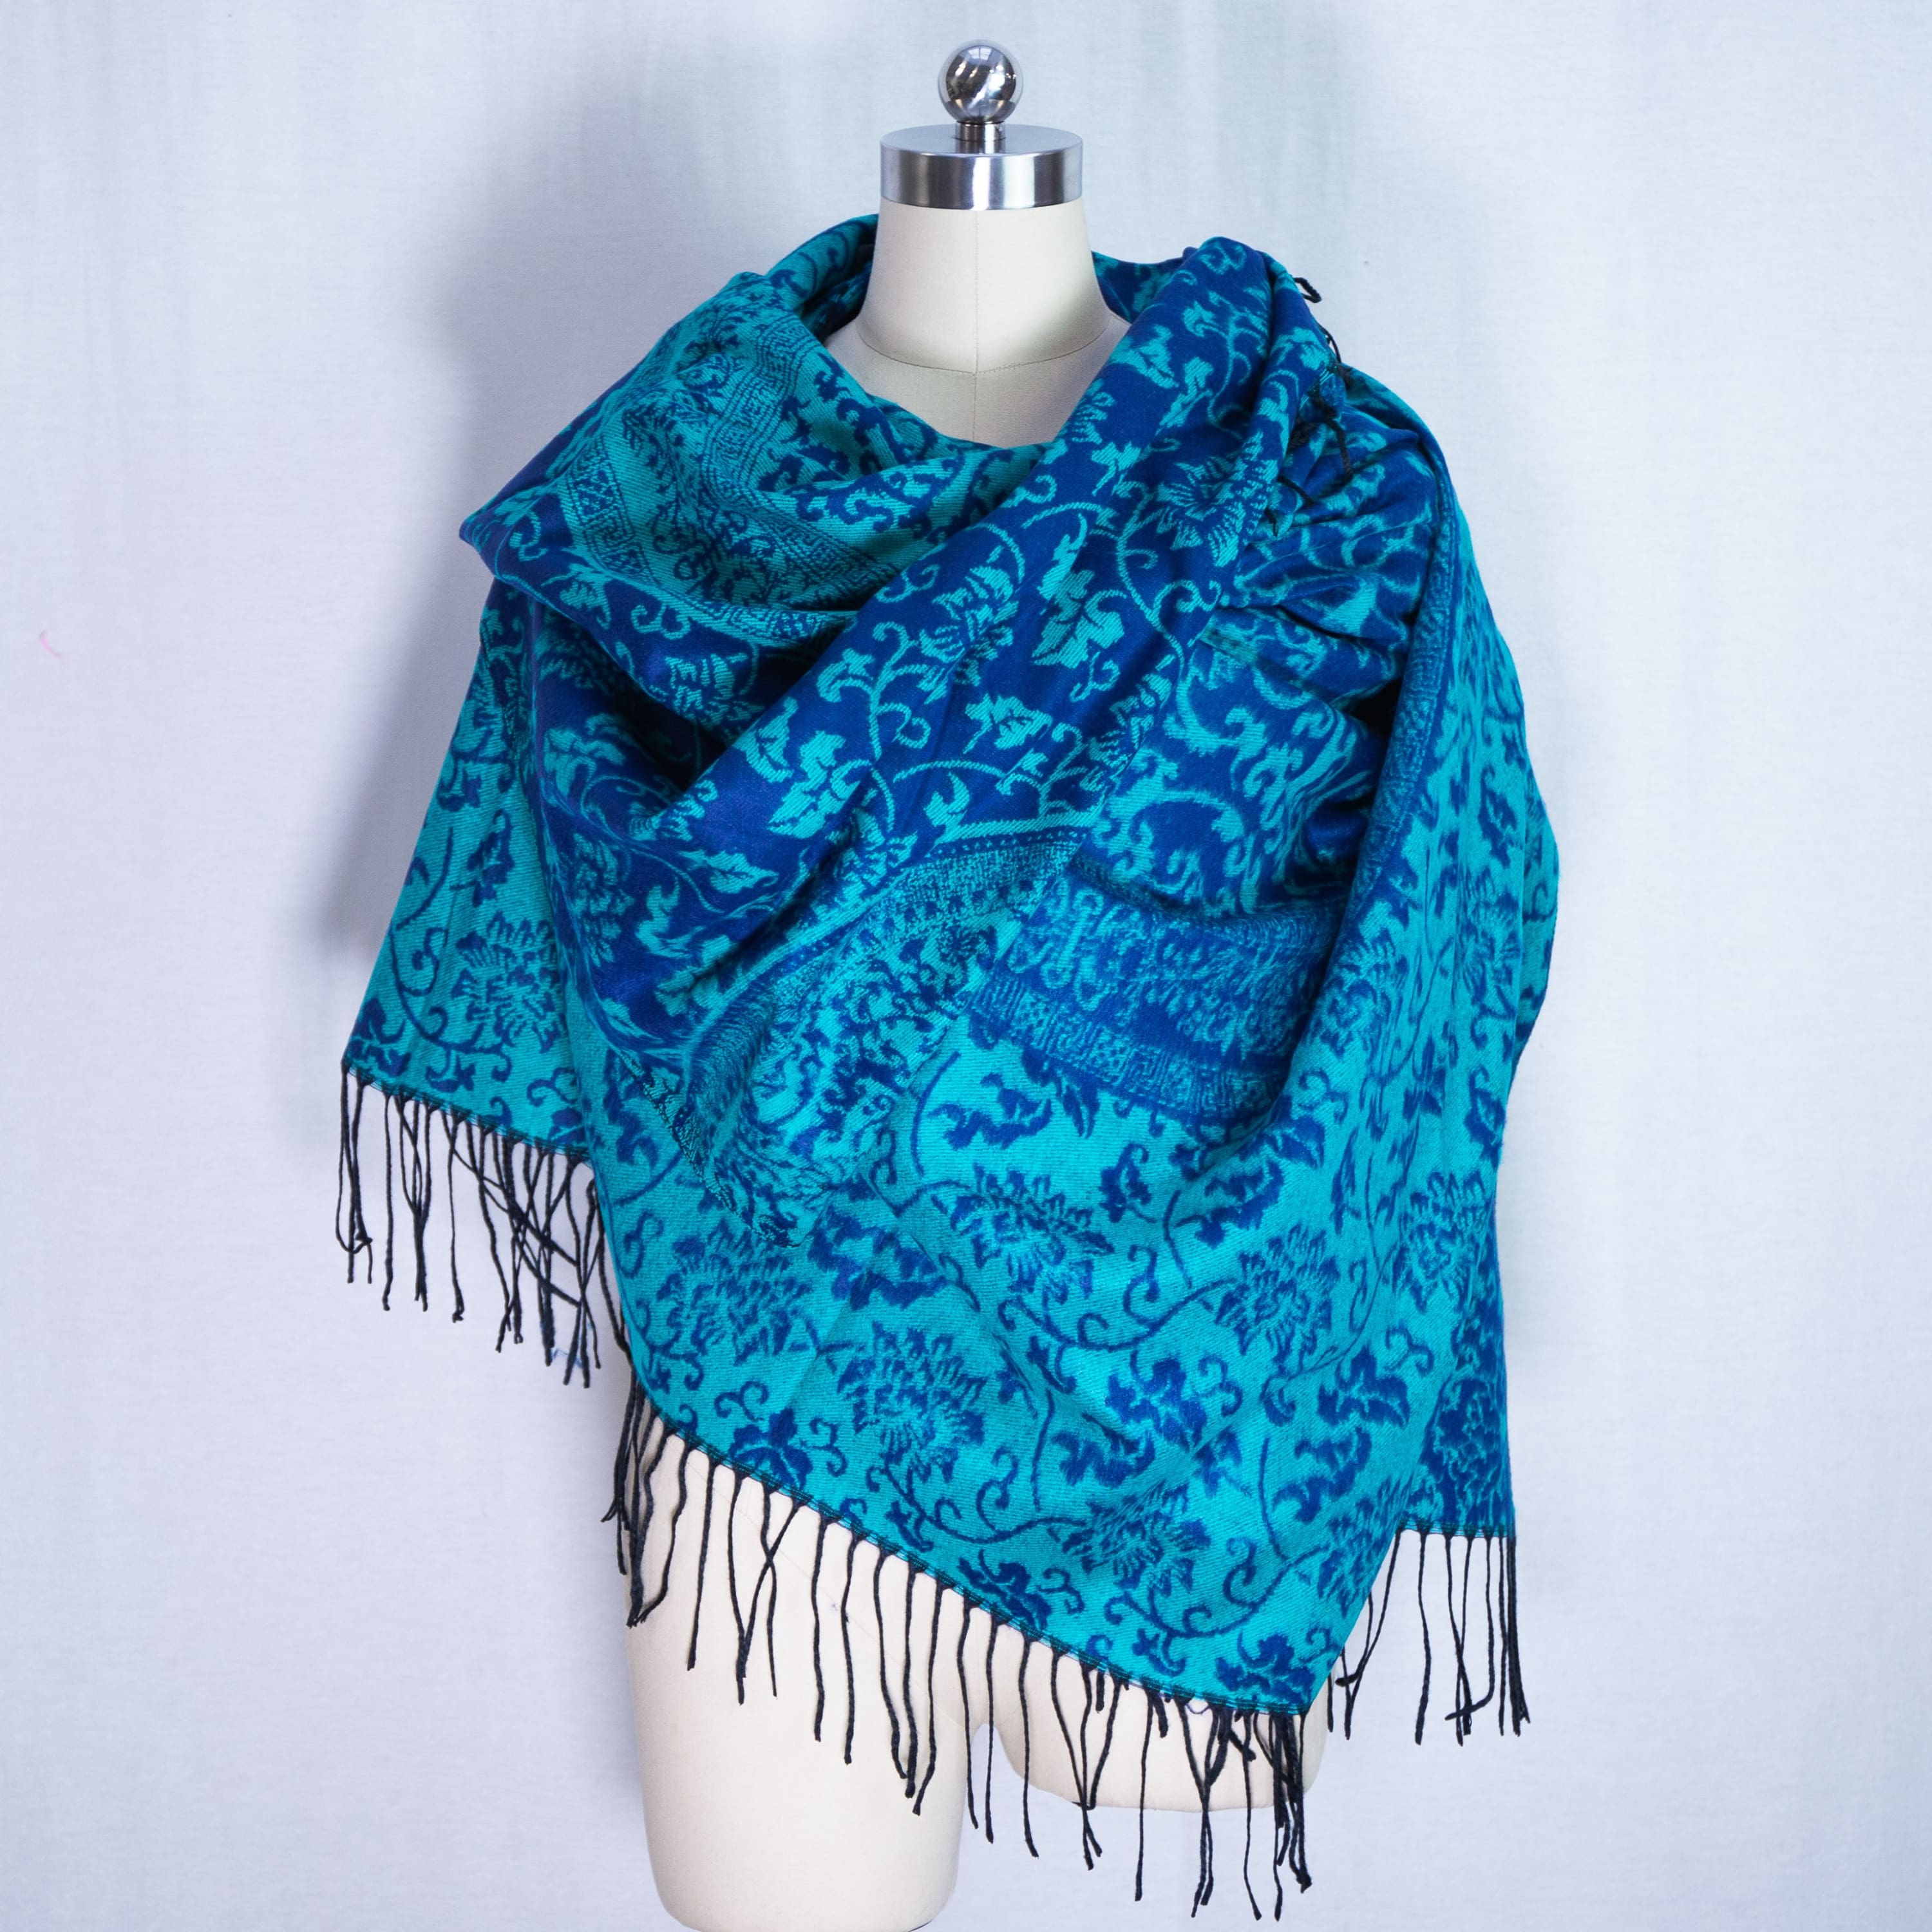 Grand foulard cachemire de pashmina - Turquoise - Foulard